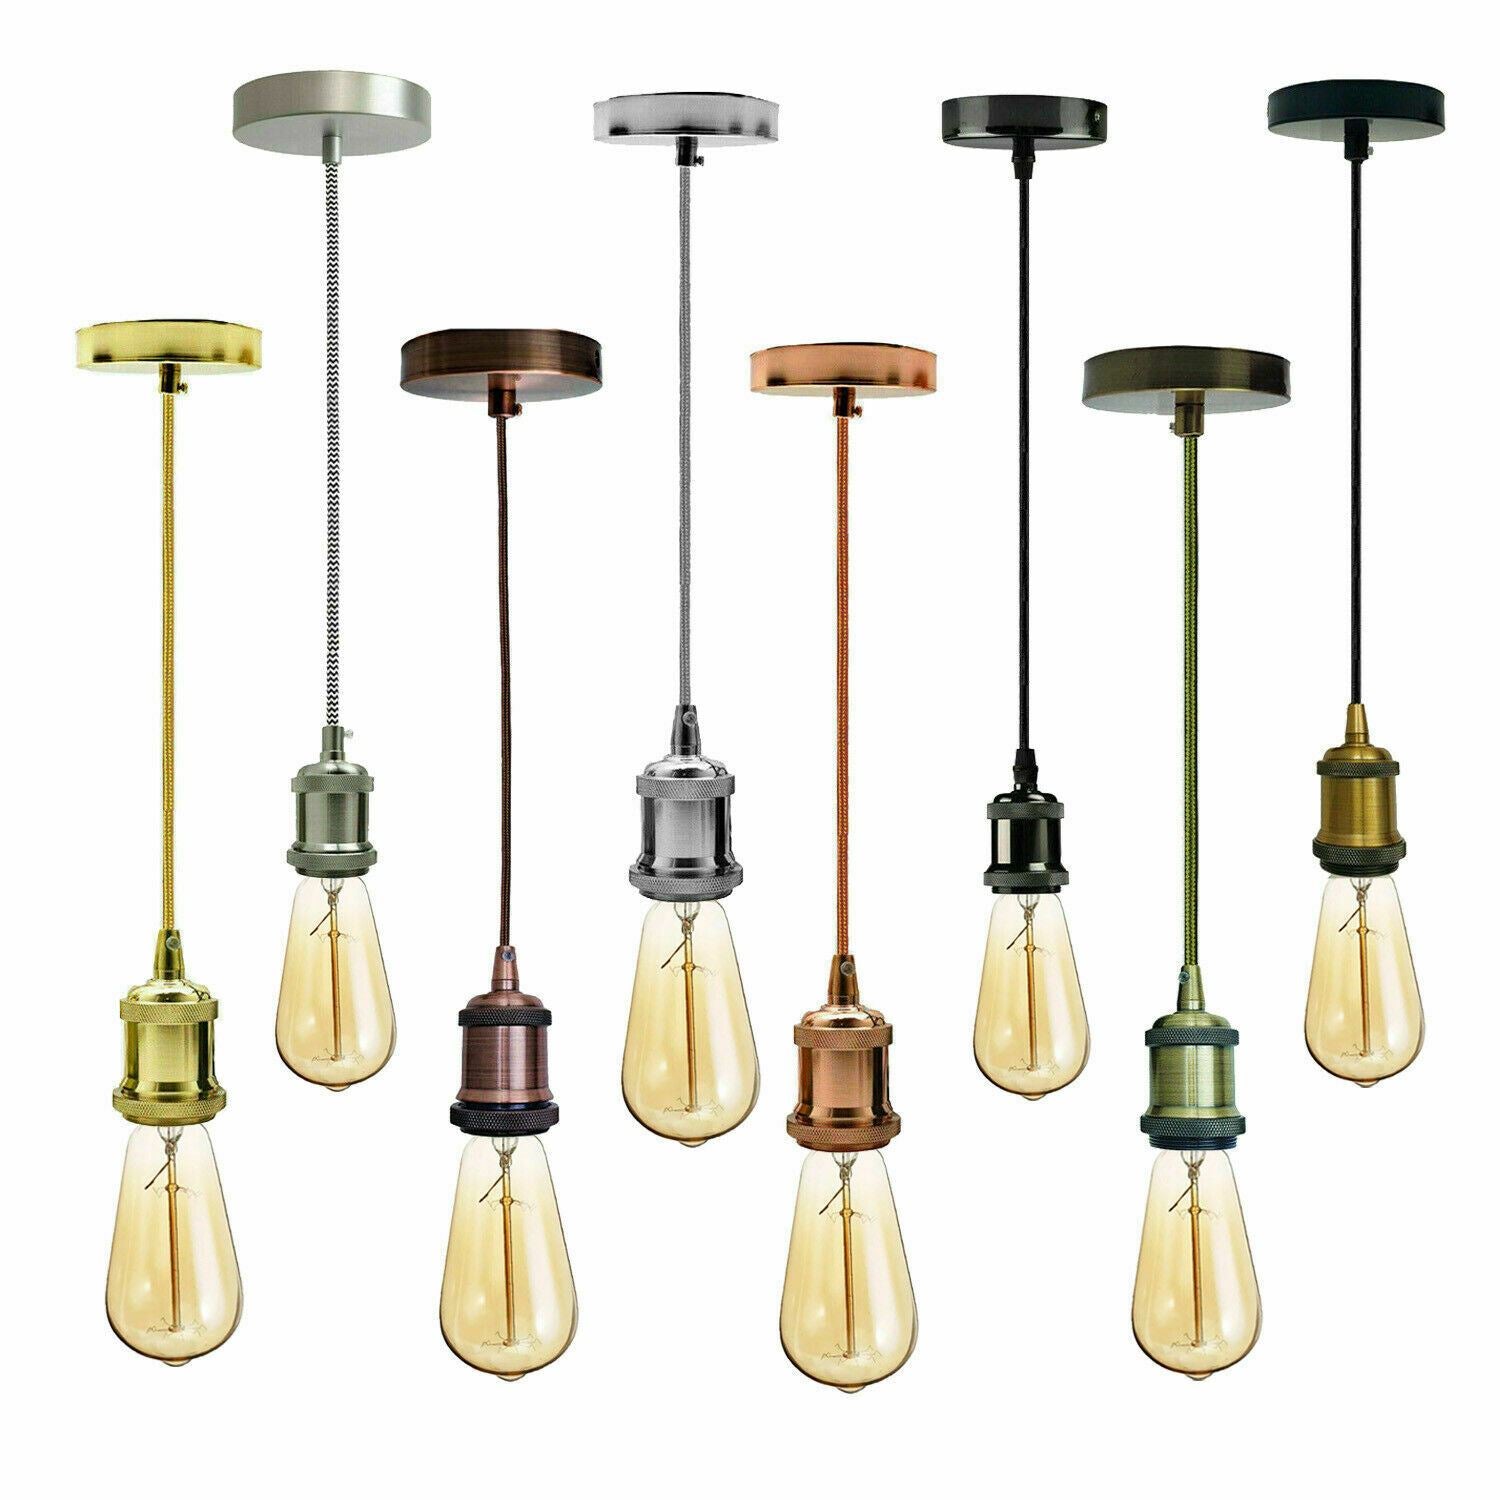 Retro Industrial Vintage Pendant Ceiling Rose Fitting E27 Lamp Bulb Holder For Bar, Bedroom, Conservatory, Dining Room~1282 - LEDSone UK Ltd